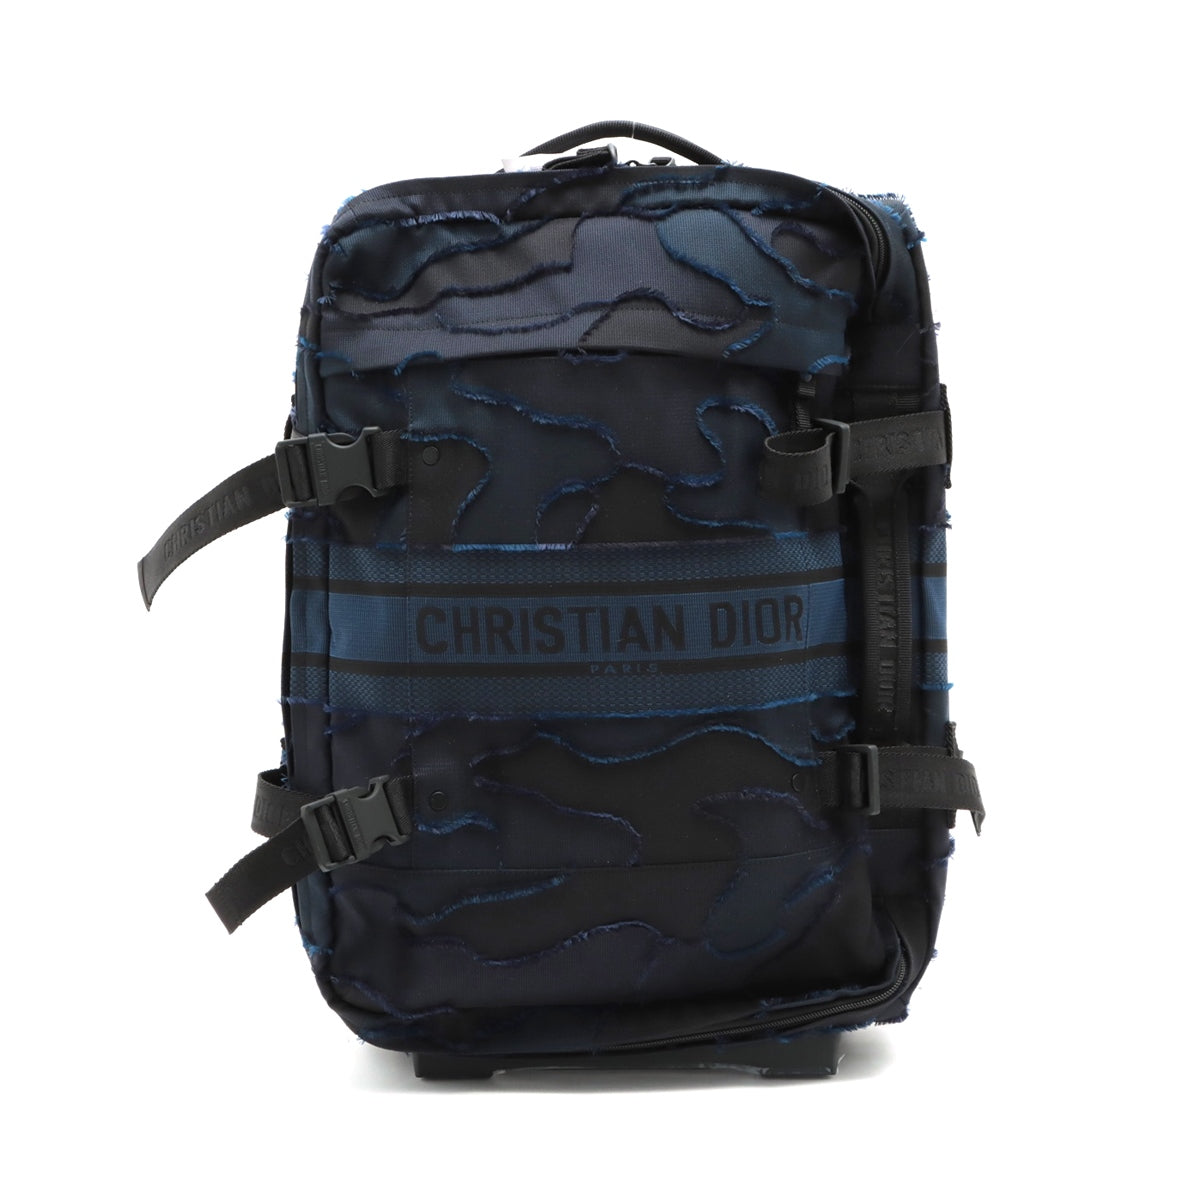 Christian Dior canvas Carry case Navy blue